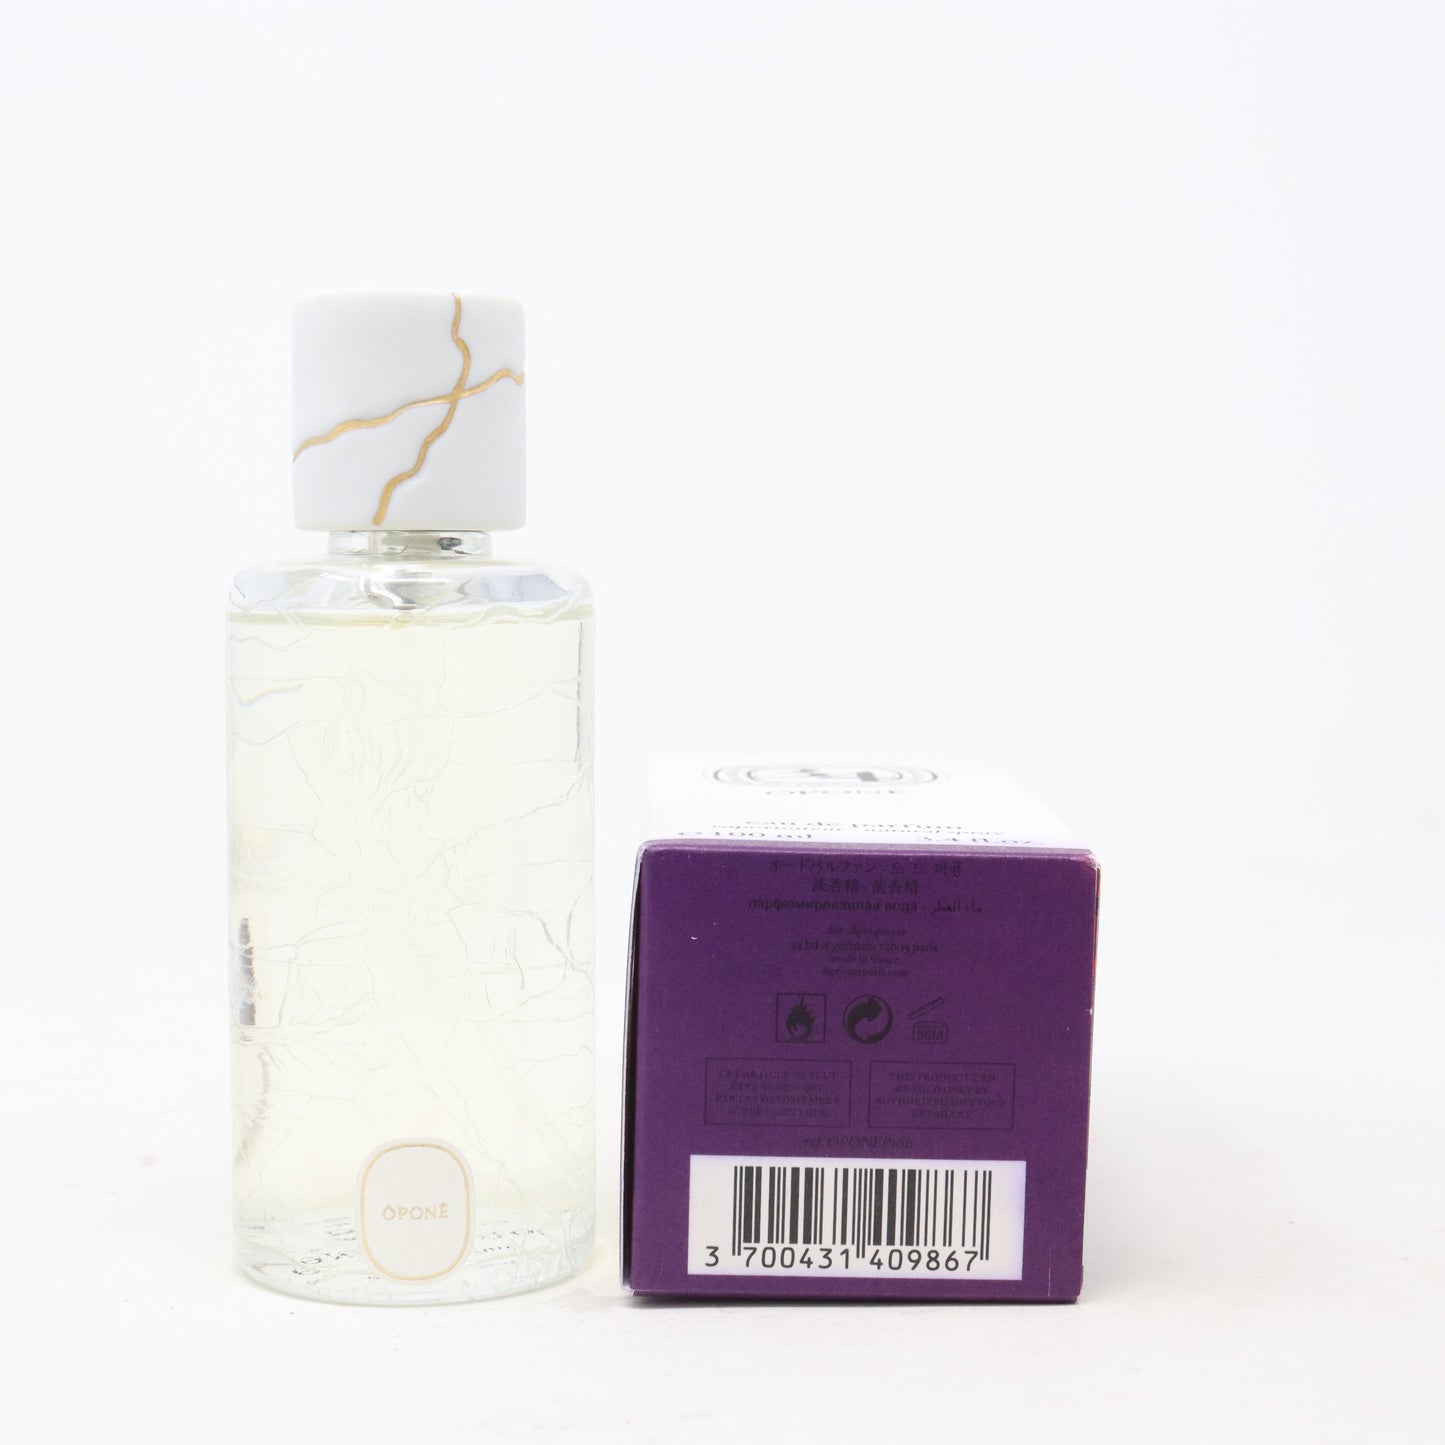 34 Opone by Diptyque Eau De Parfum 3.4oz/100ml Spray New With Box